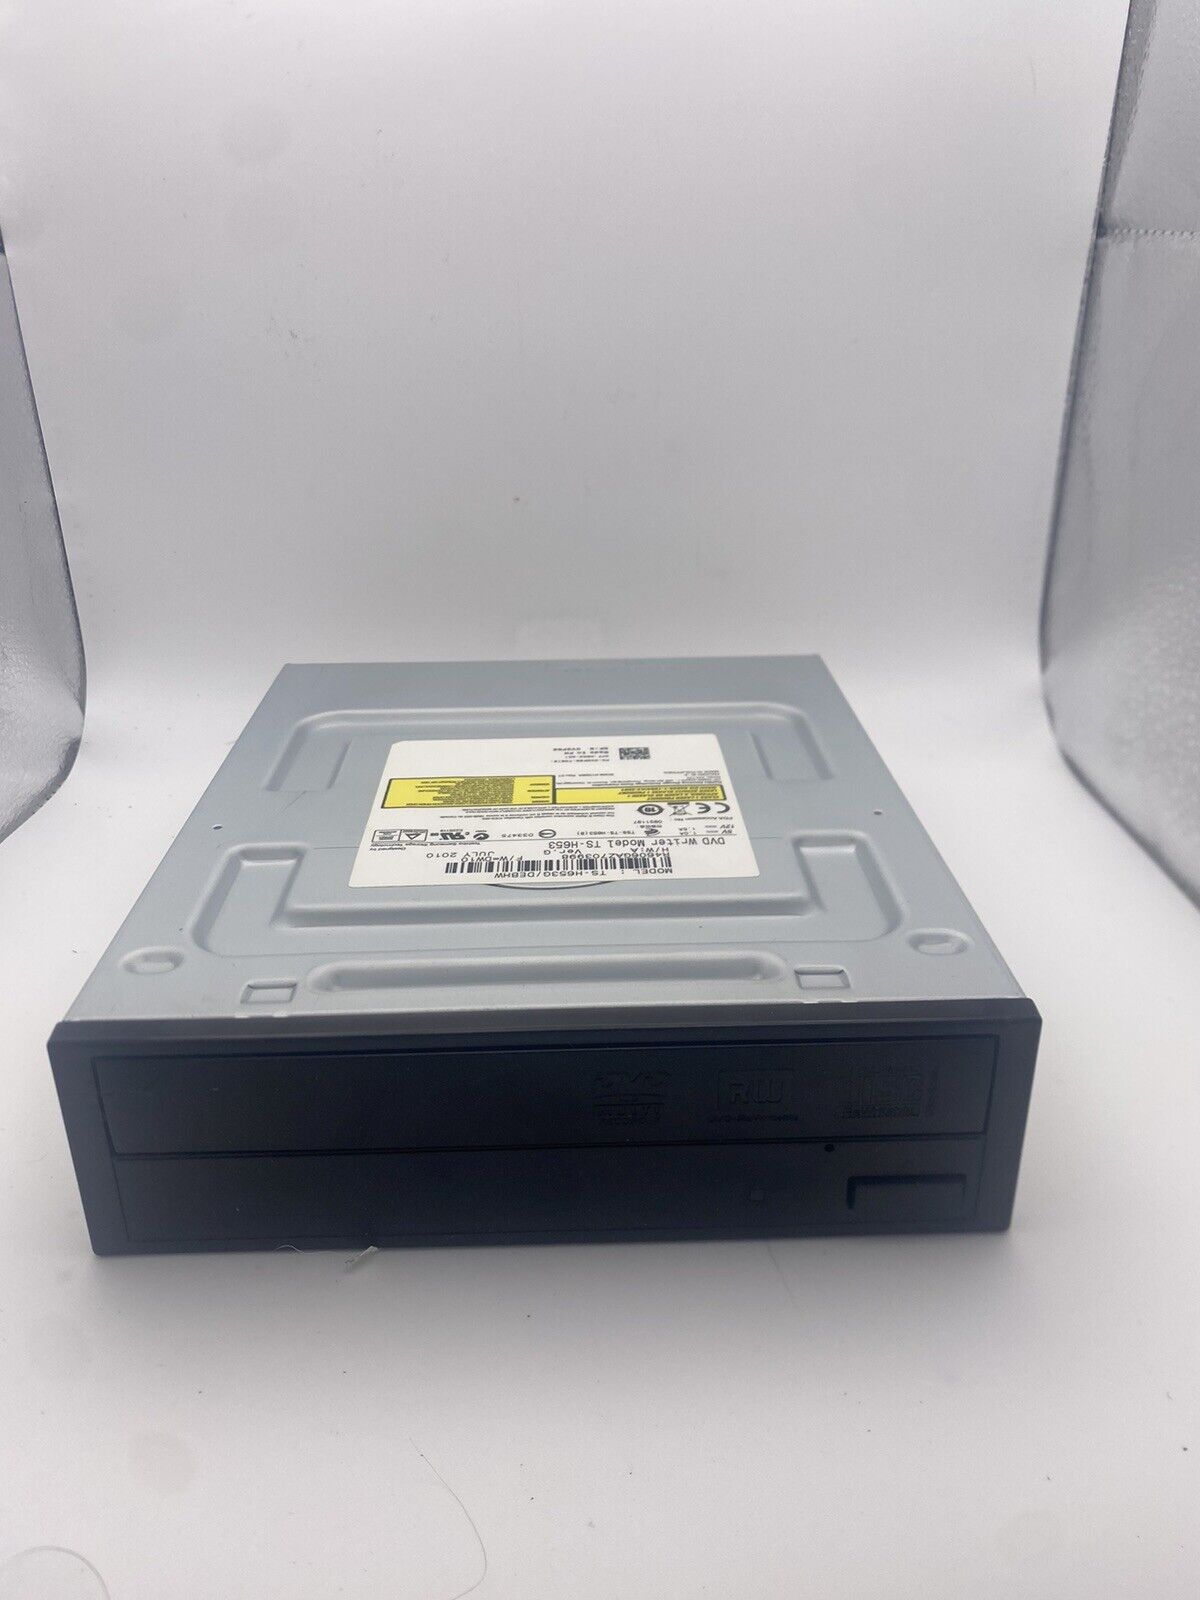 Toshiba DVD Writer Model TS-H653 SATA DVD Recordable/CD-RW Drive